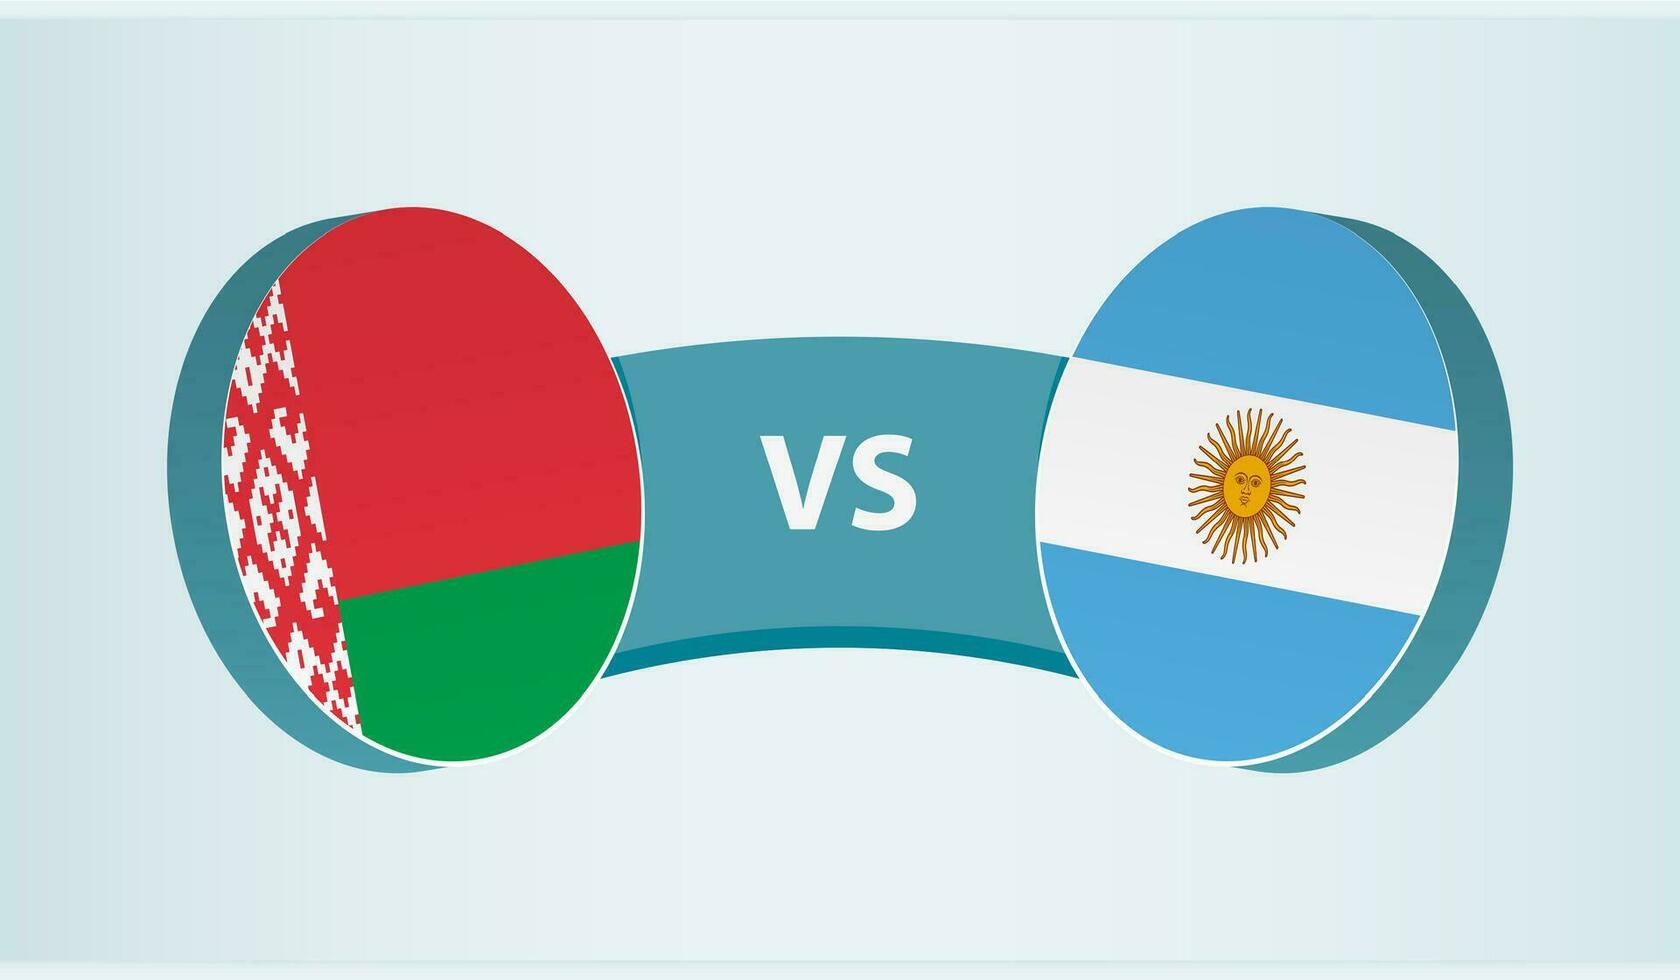 Belarus versus Argentina, team sports competition concept. vector